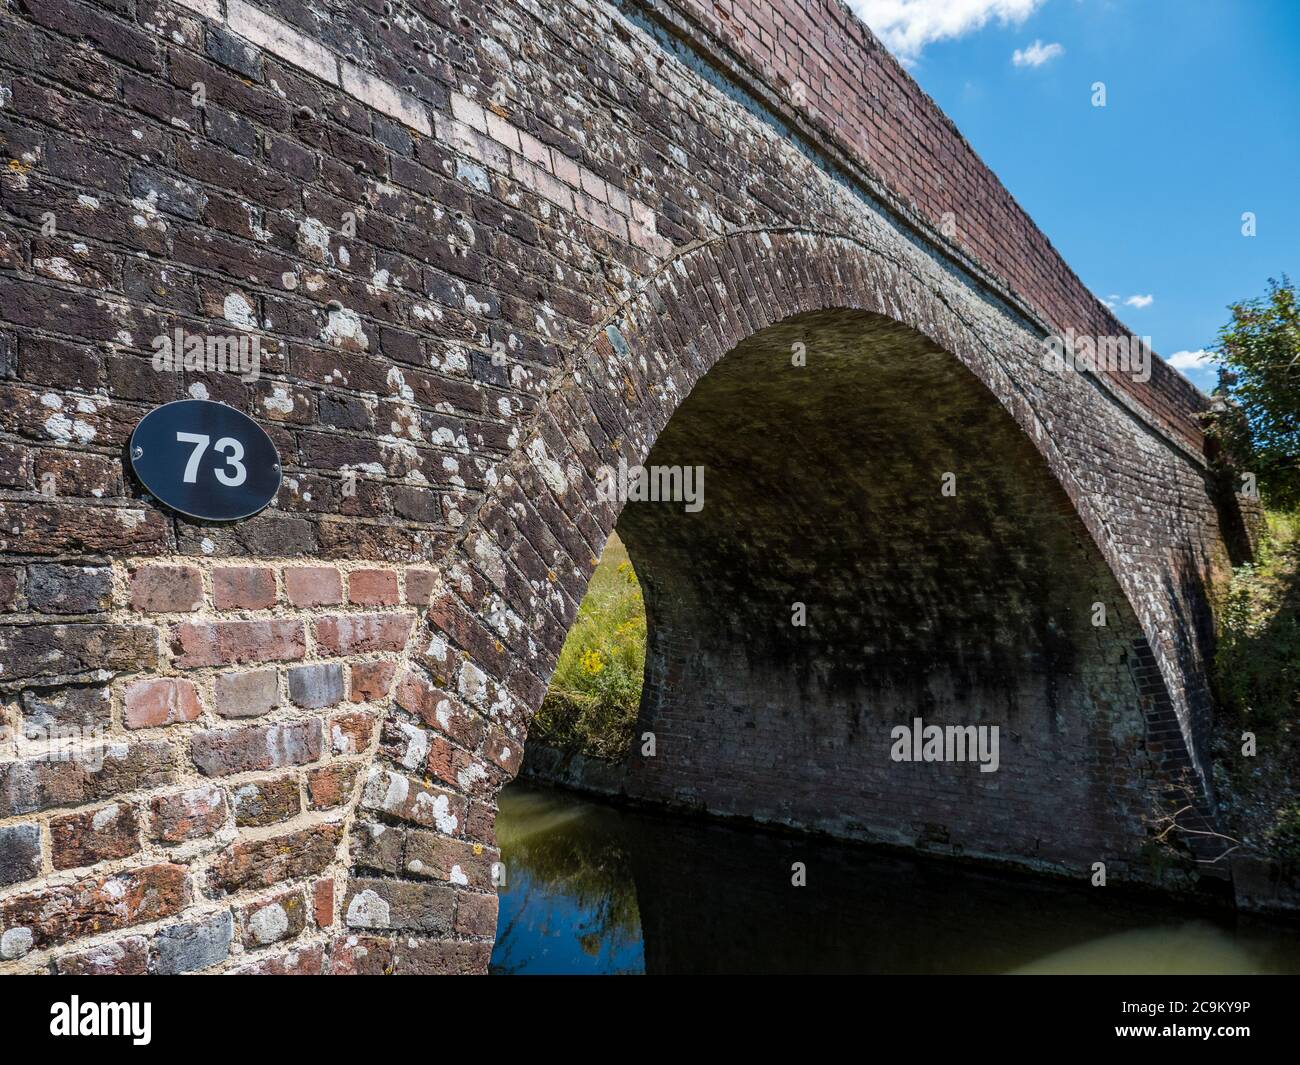 Canal Bridge, Kennett et Avon Canal, Kintbury, Hungerford, Berkshire, Angleterre, Royaume-Uni, GB. Banque D'Images